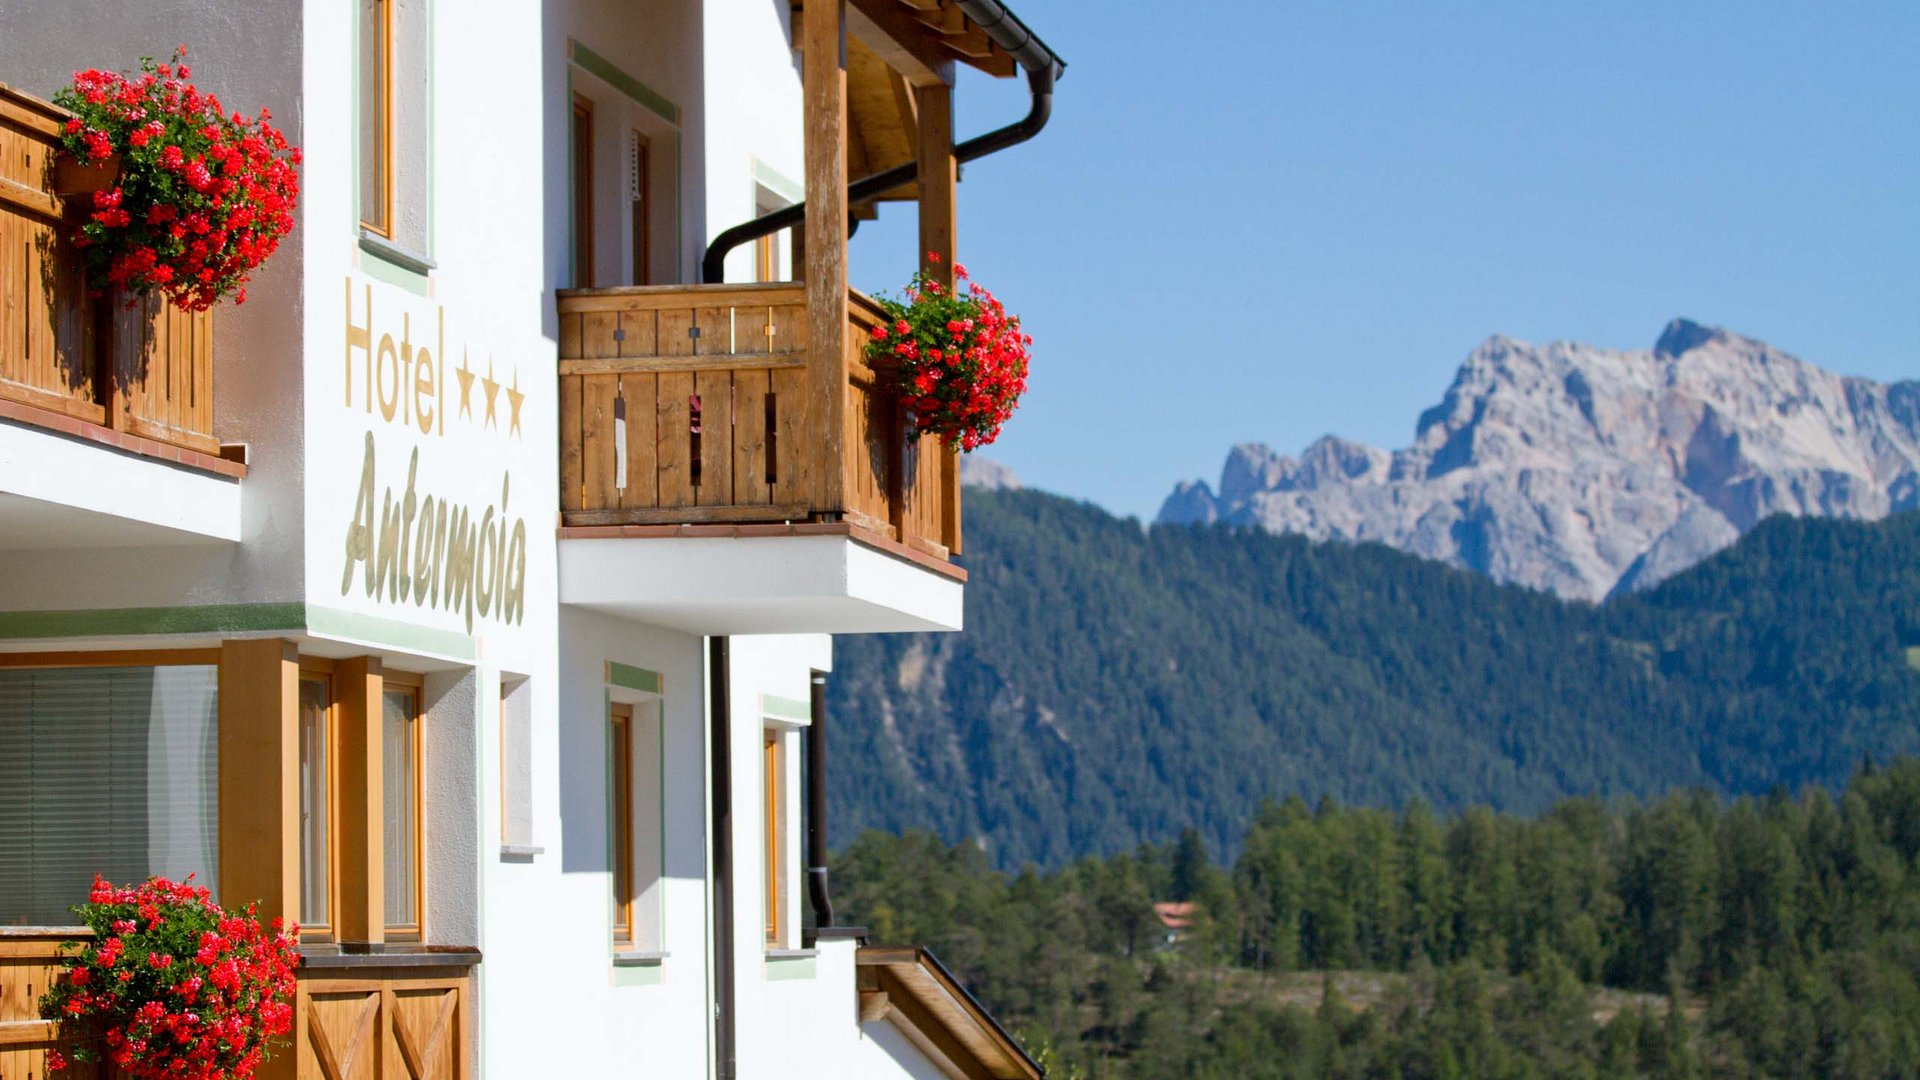 Hotel Antermoia – a mountain jewel